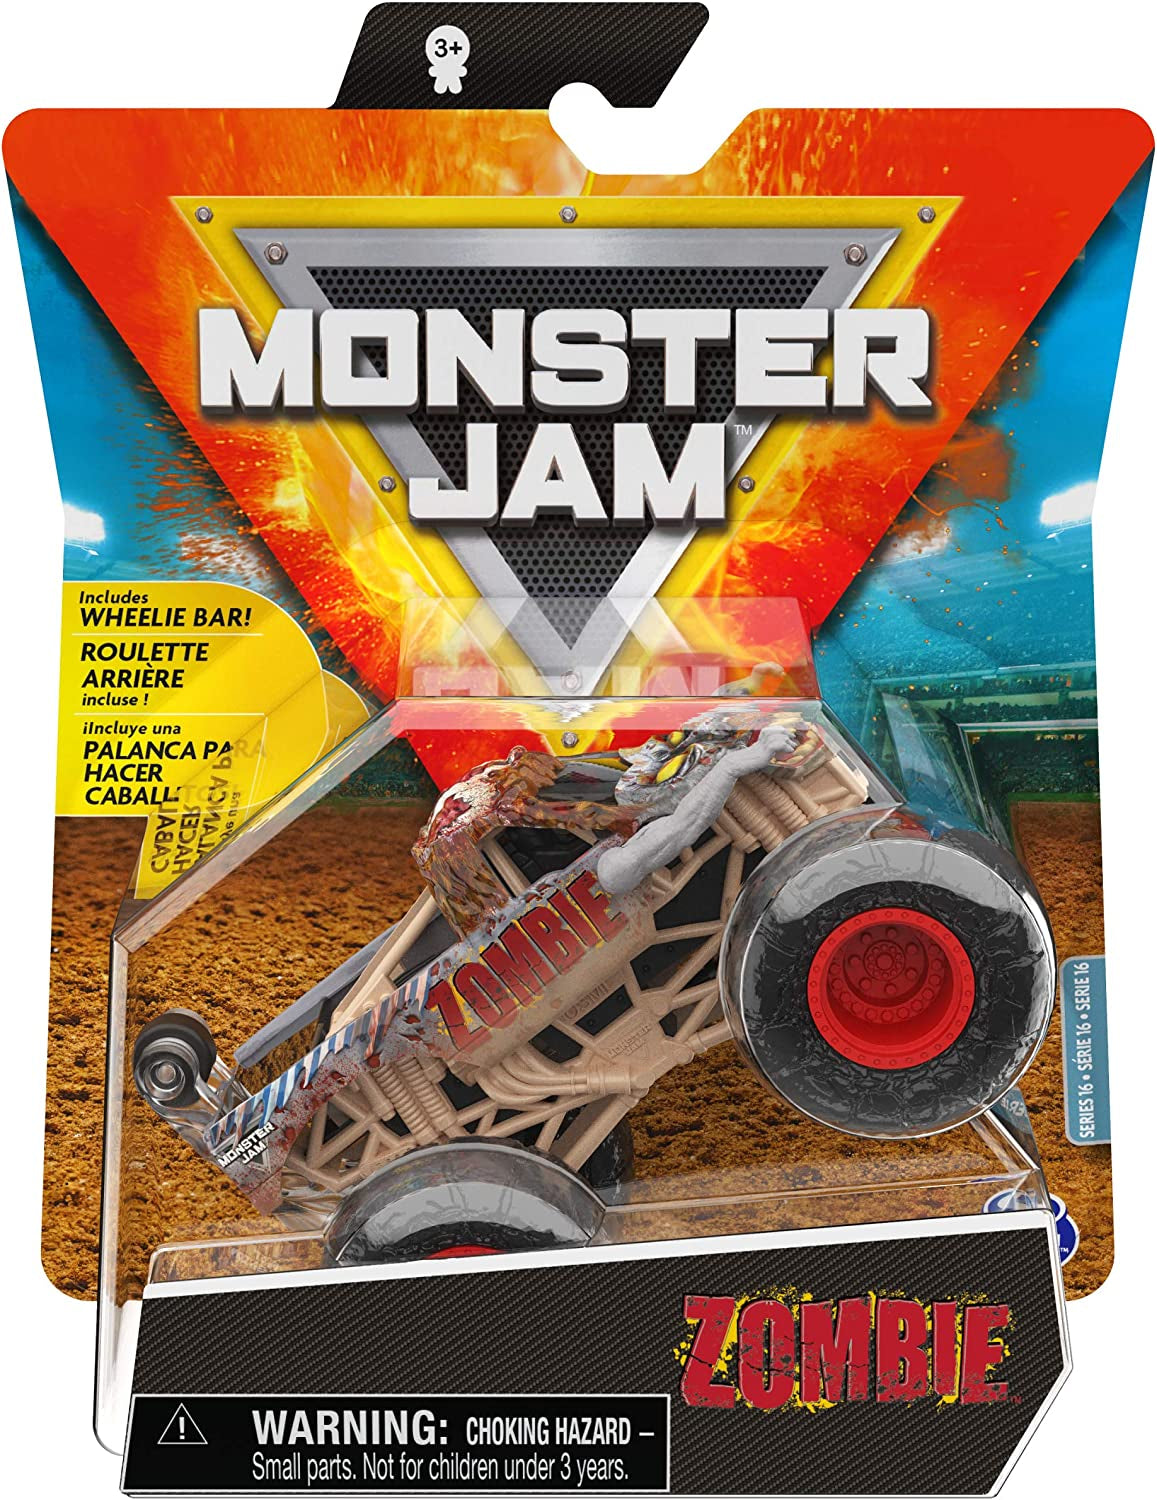 Monster Jam, Official Megalodon Monster Truck, Die-Cast Vehicle, Elementals Trucks Series, 1:64 Scale